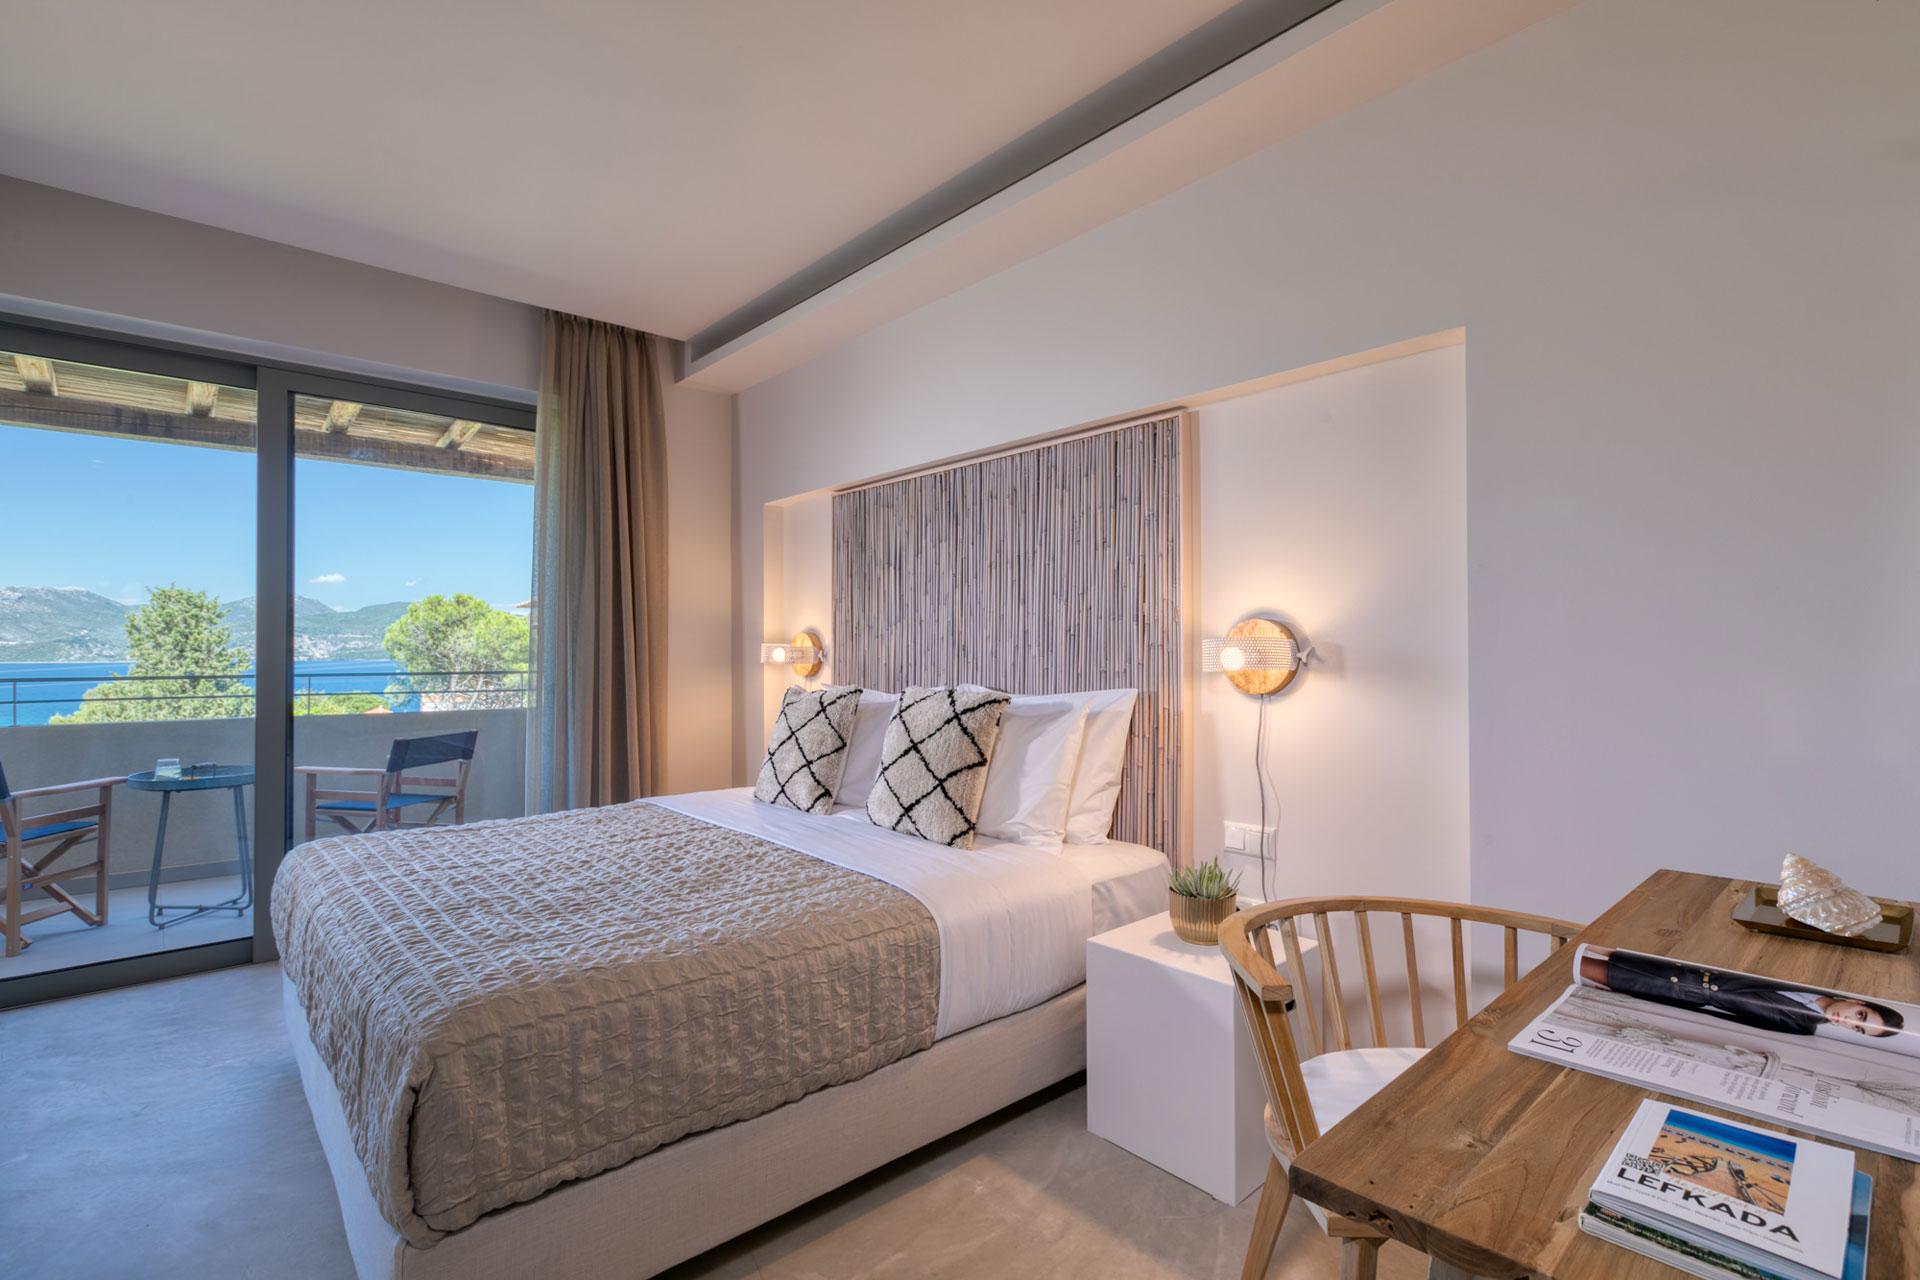 Lefkada Crystal Waters Hotel-Lefkadab accommodation,Lefkada Hotels